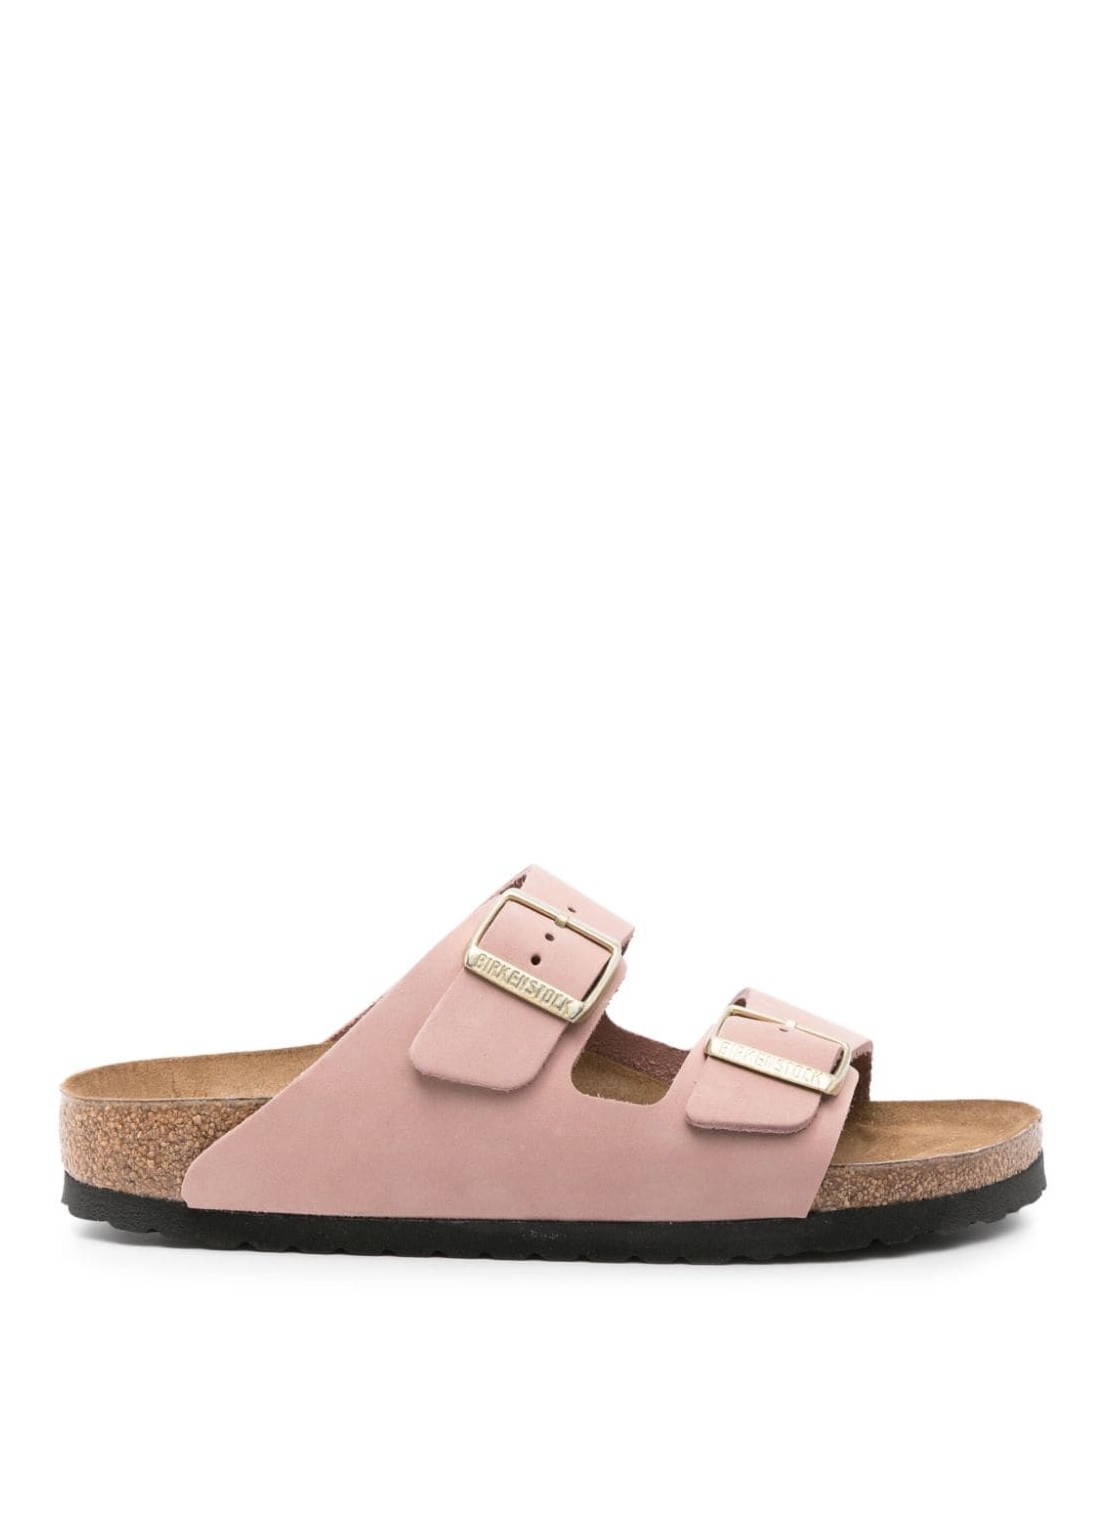 Planas birkenstock flat shoe woman arizona lenb soft pink 1026684 soft pink talla 38
 